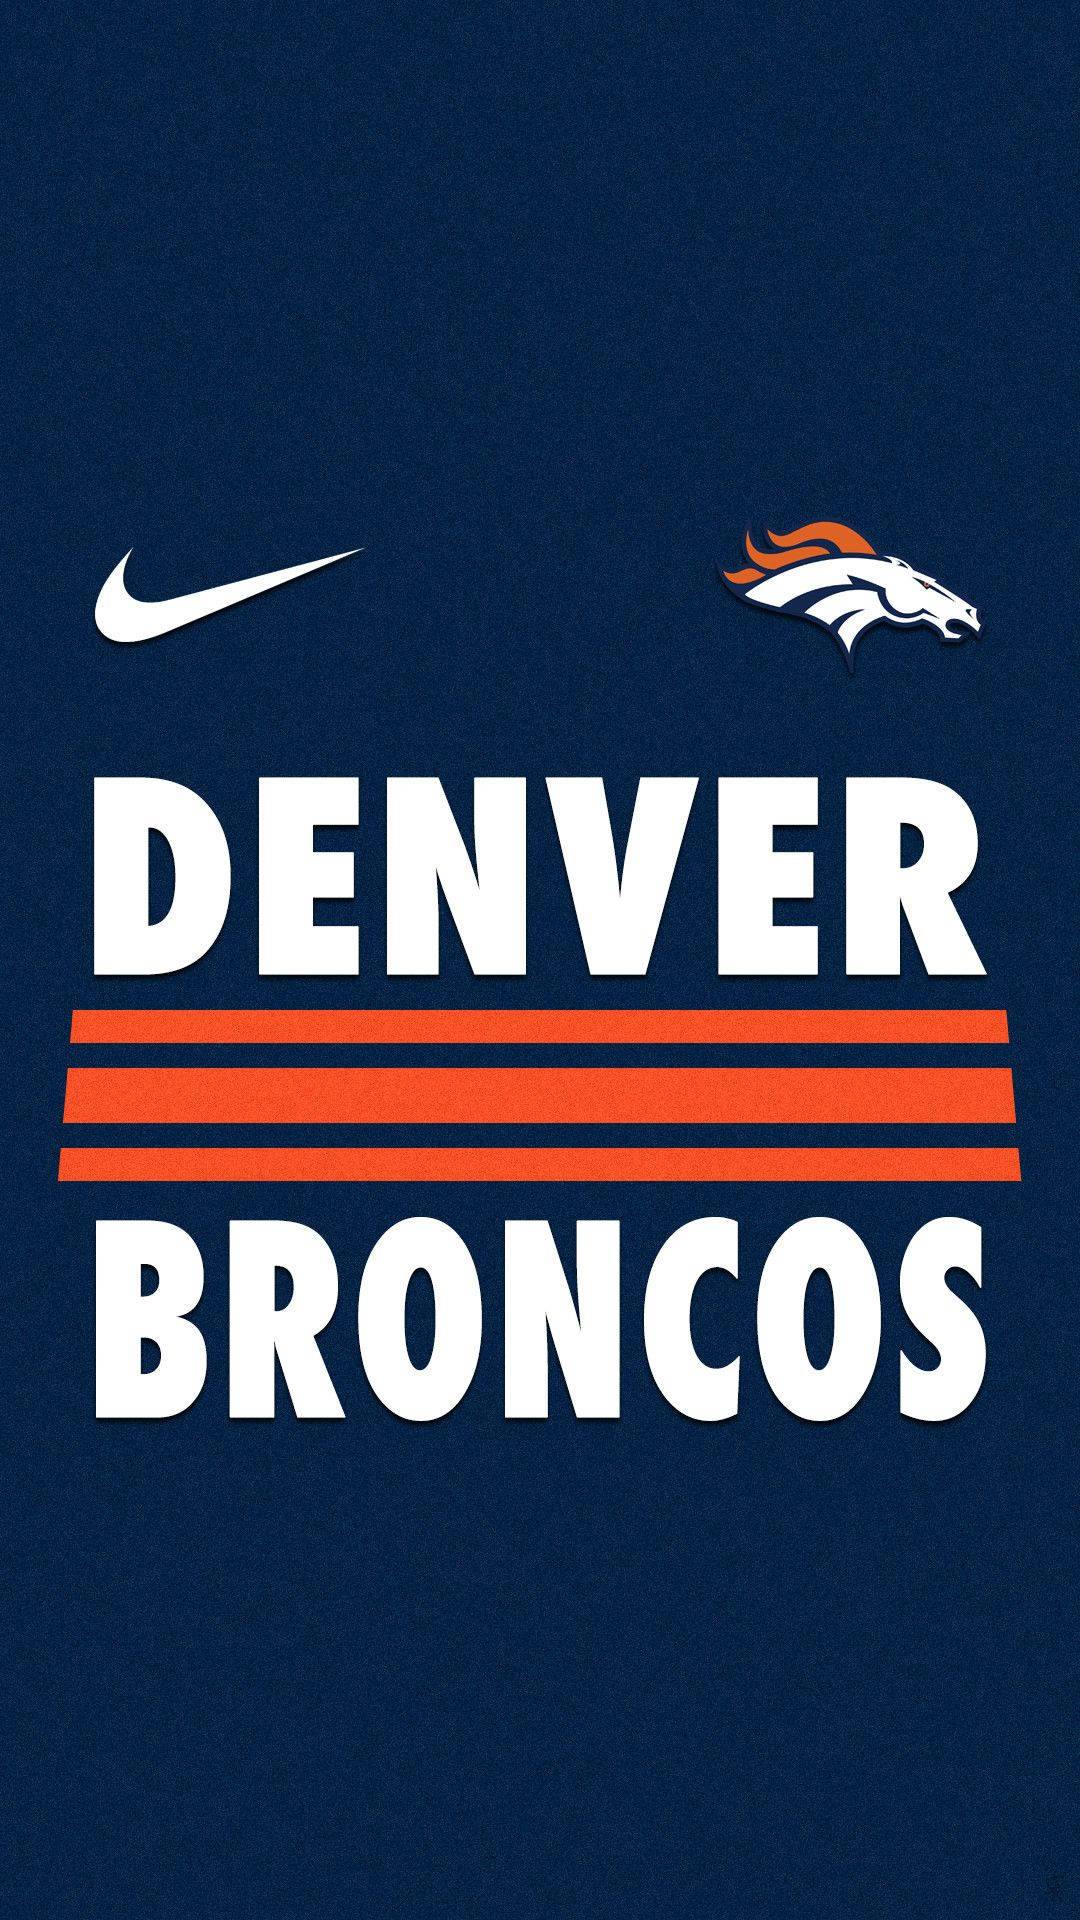 Denver Broncos Printed In Text Wallpaper